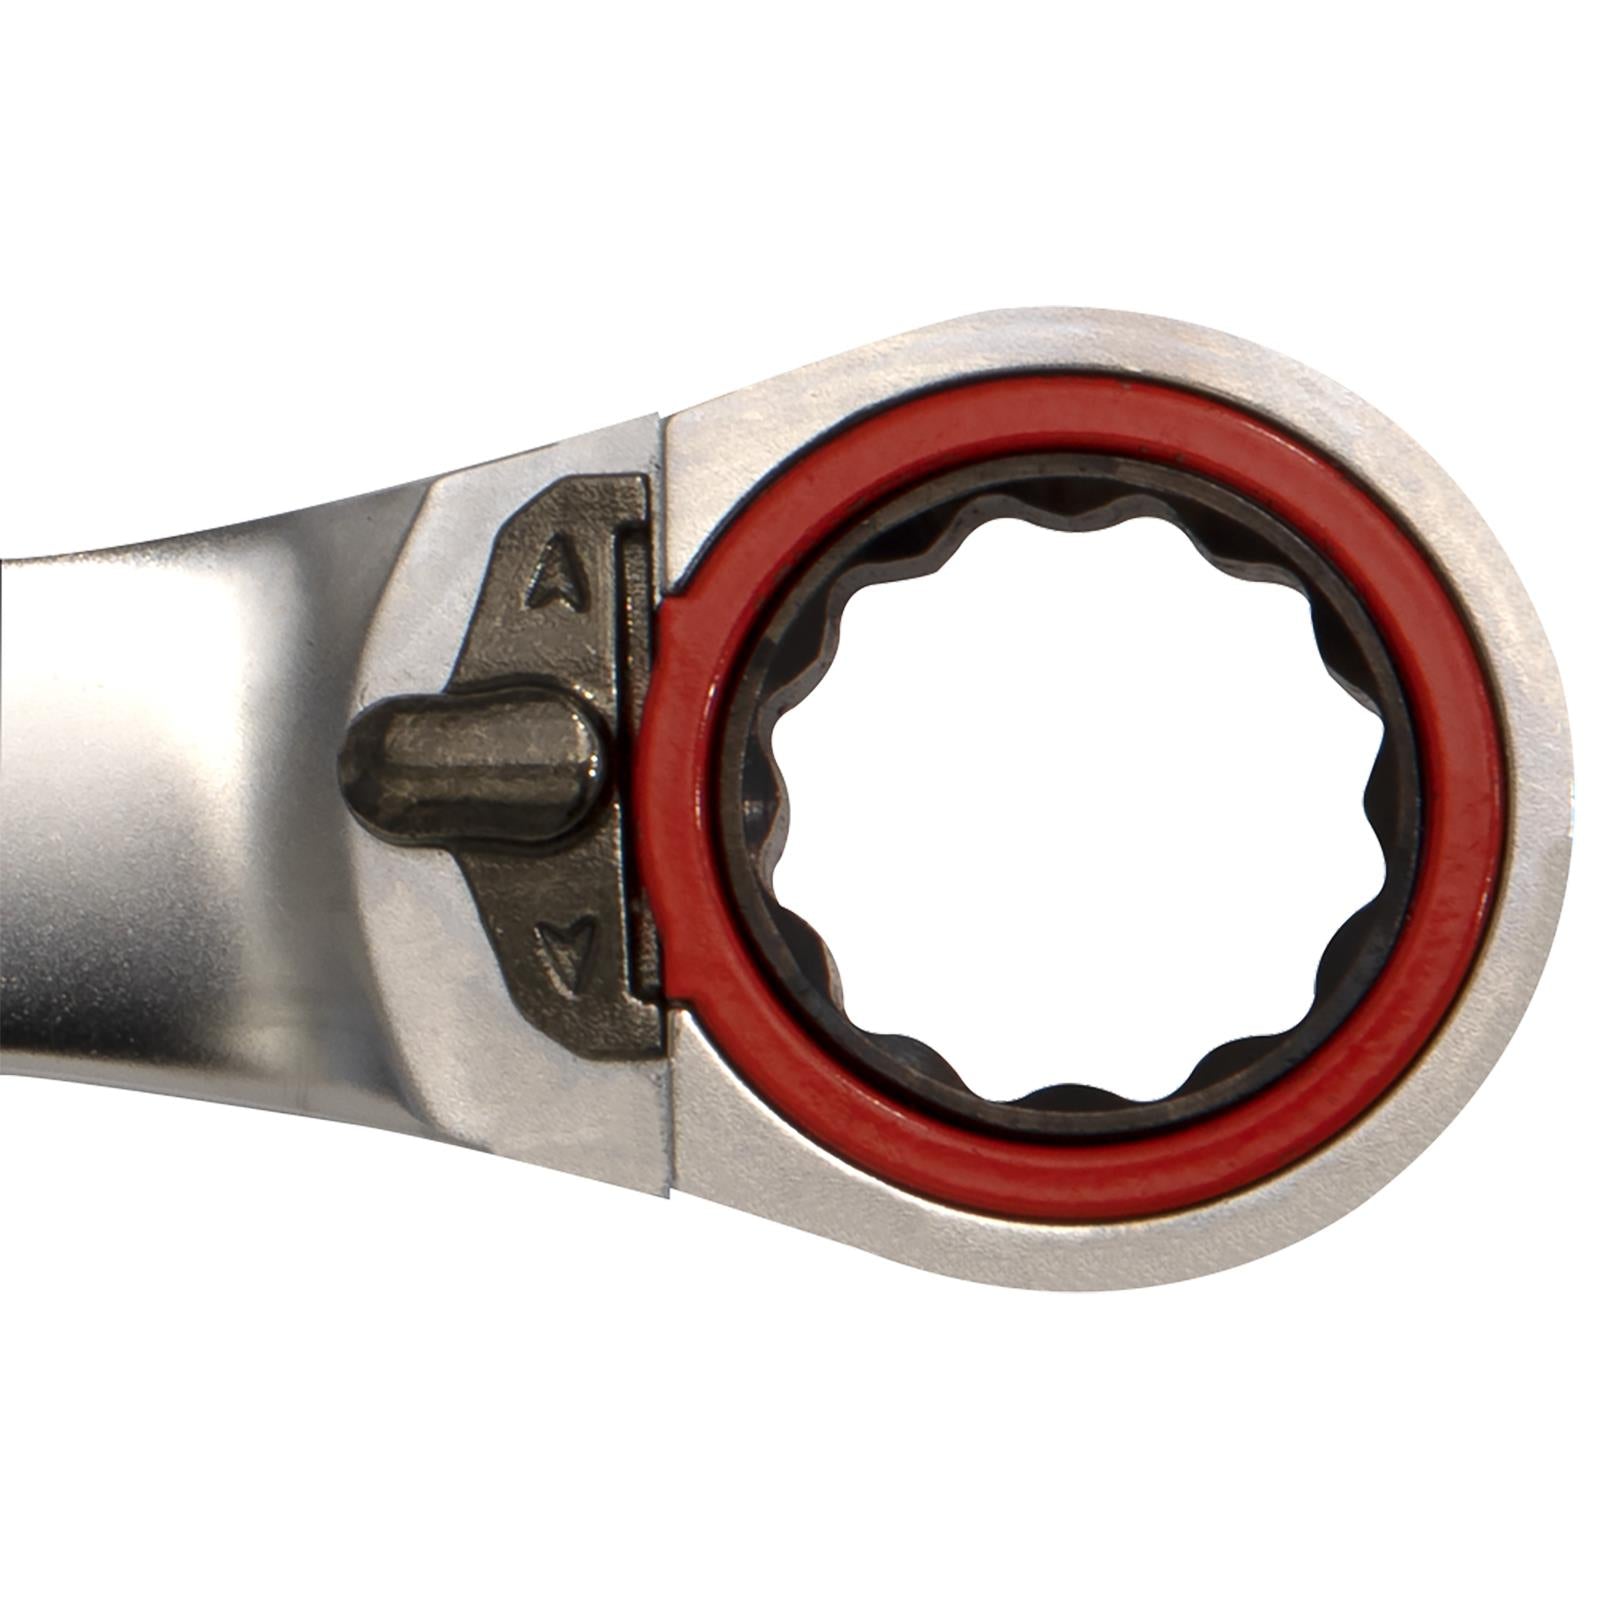 Sealey Reversible Ratchet Combination Spanner Set 7 Piece 8-19mm 100 Tooth Premier